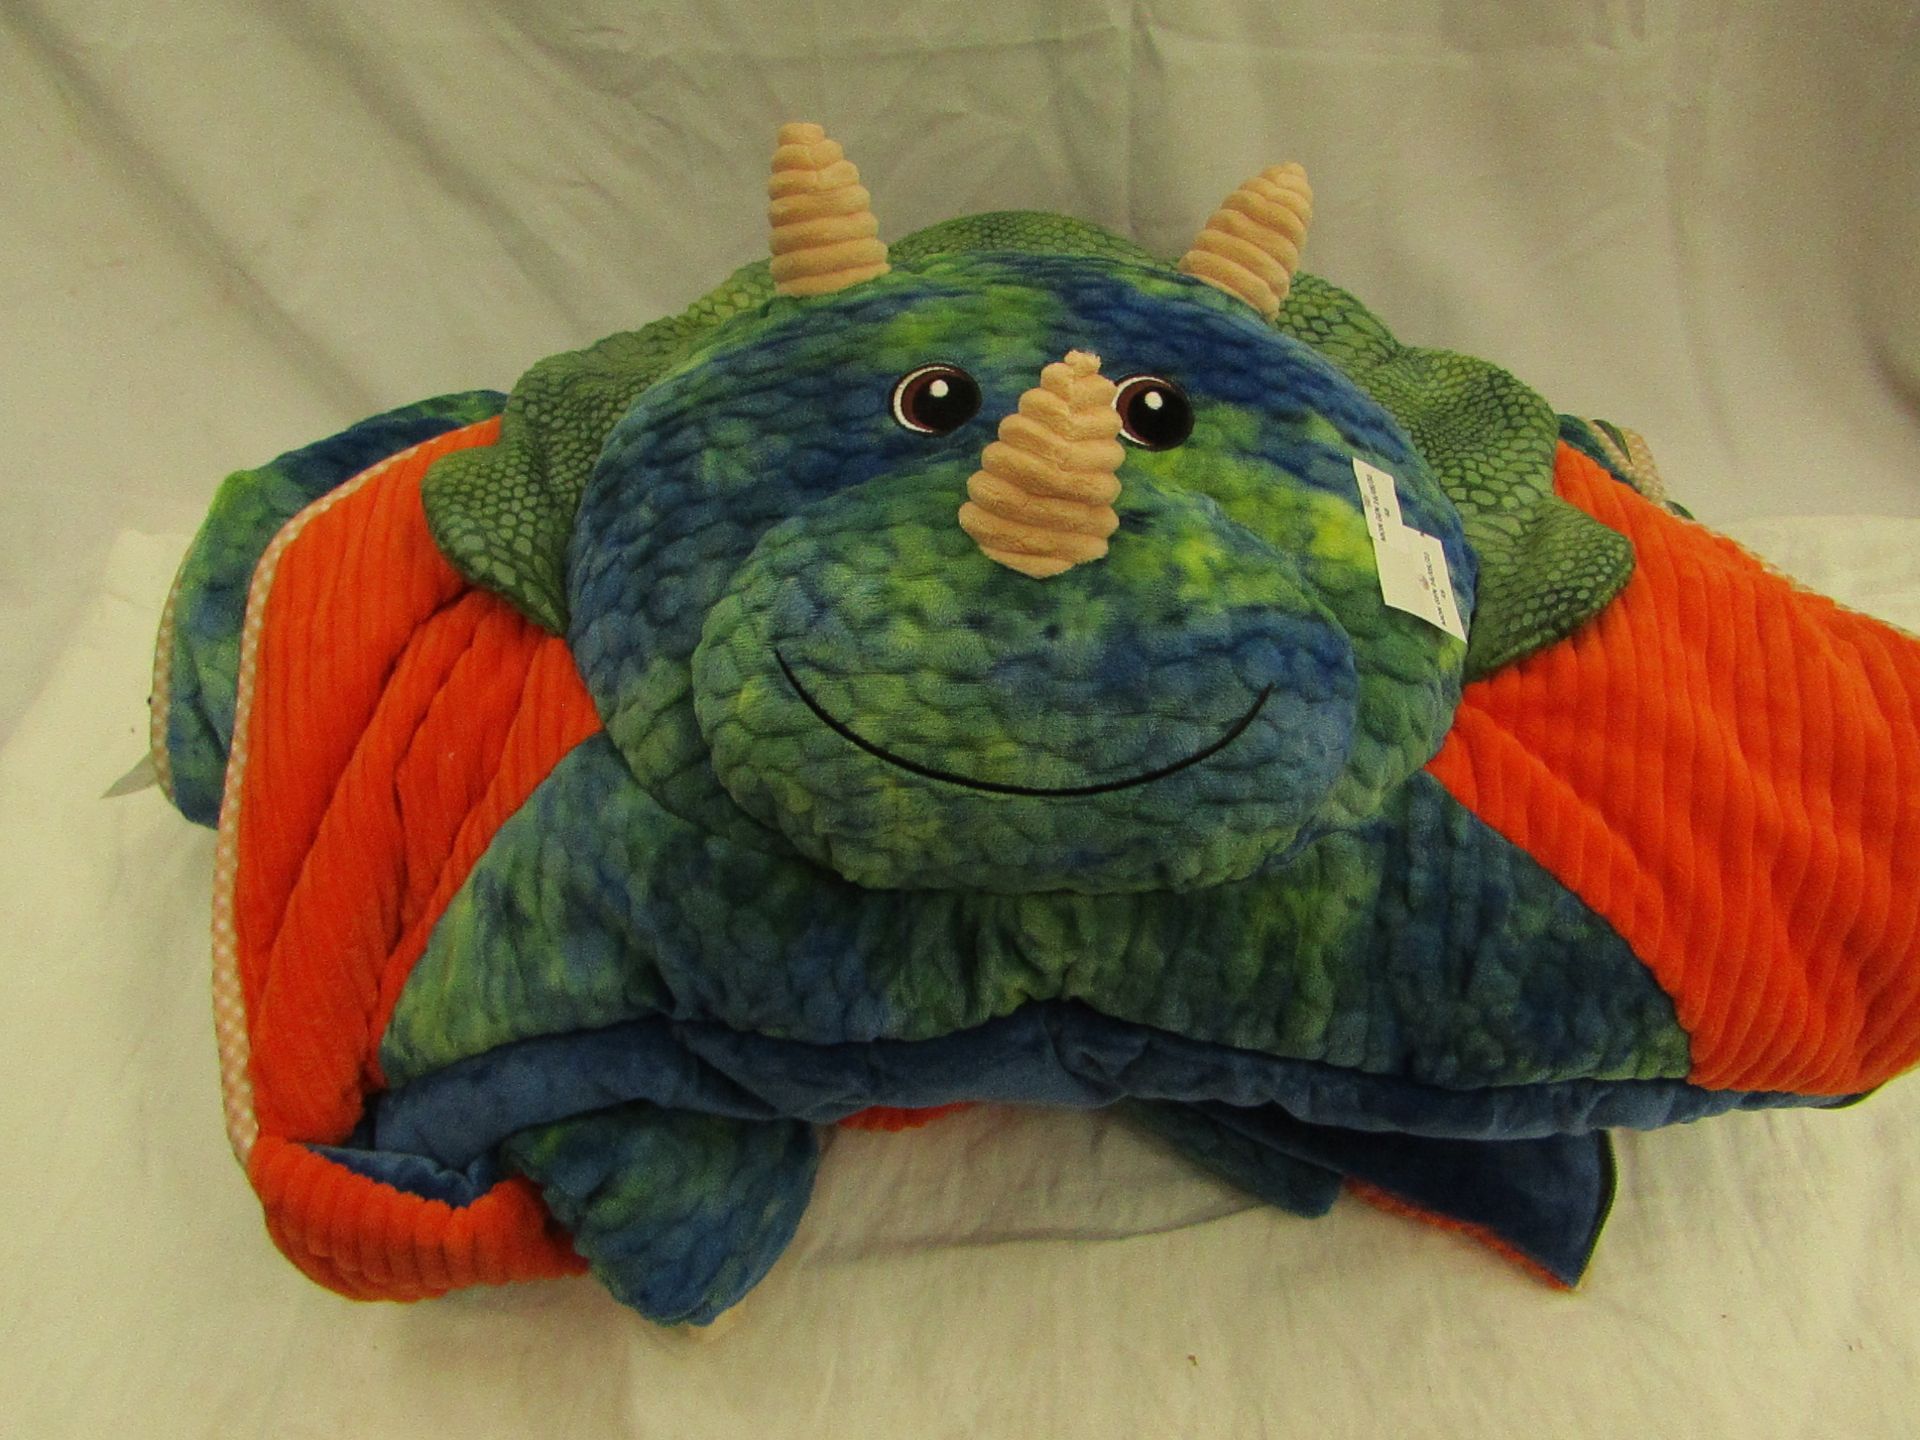 Hug-Fun - Triceratops Style Sleeping Bag - No Packaging, Still Very Usable.